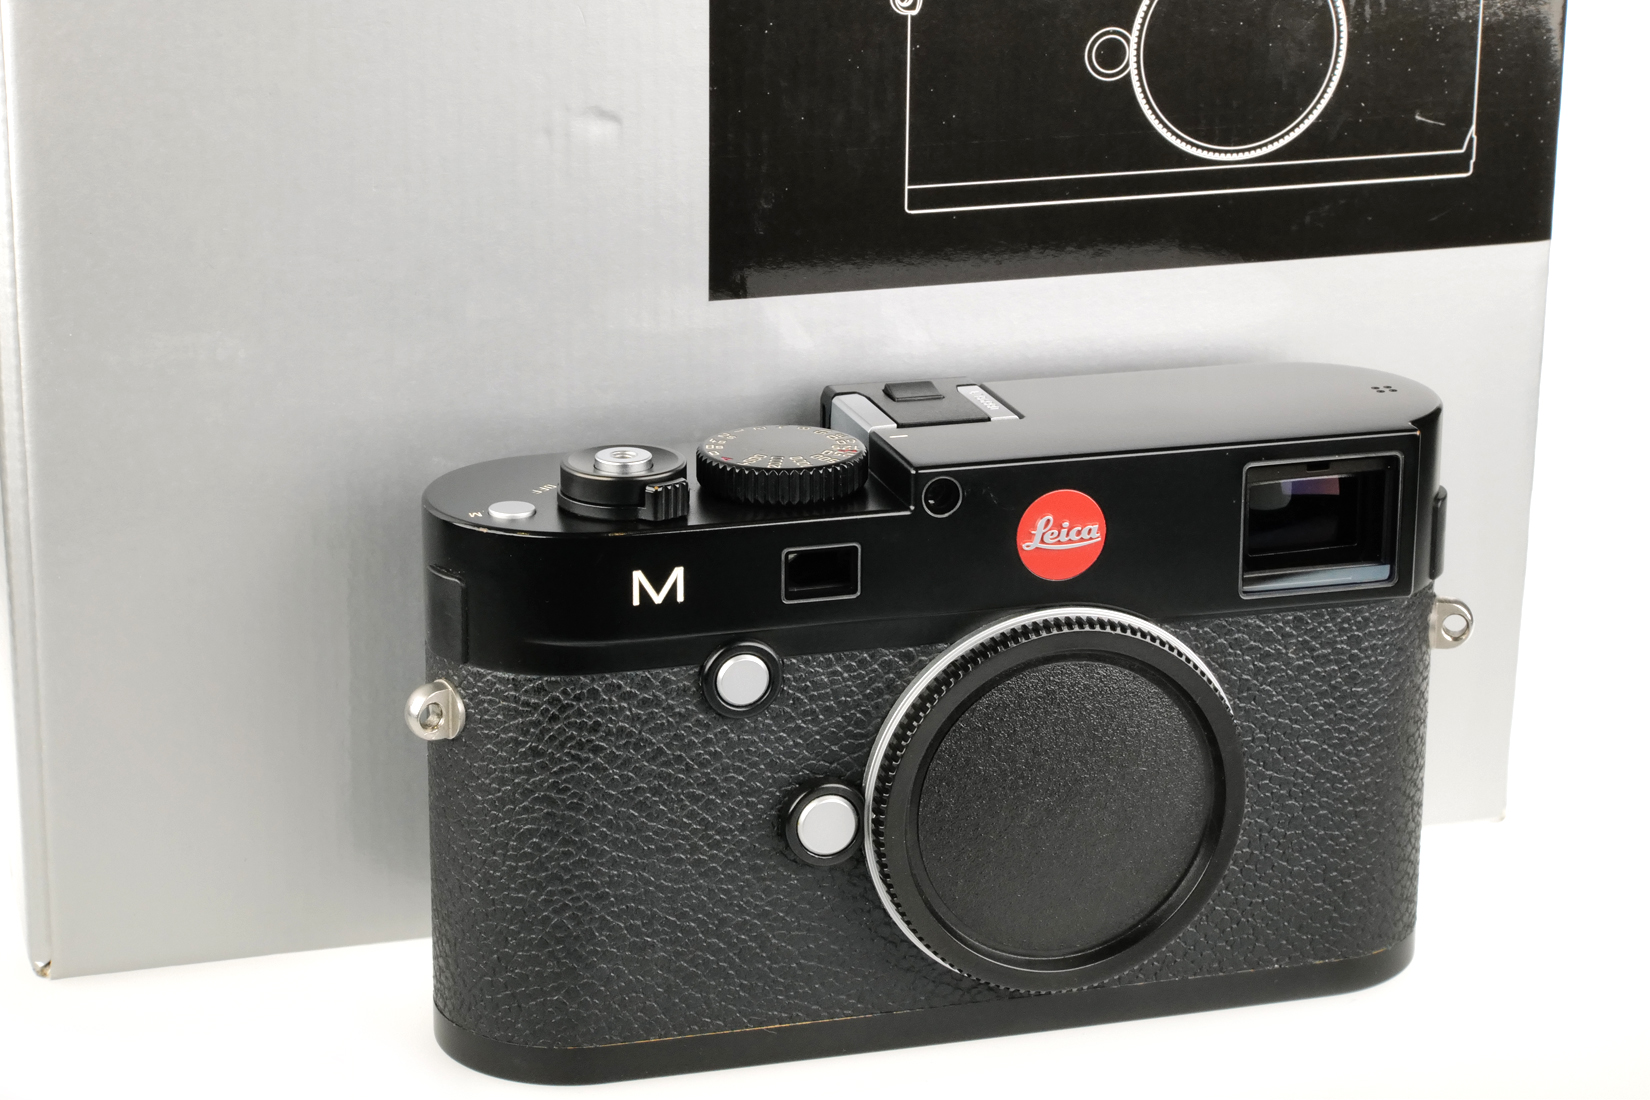 Leica M (Typ 240), black paint